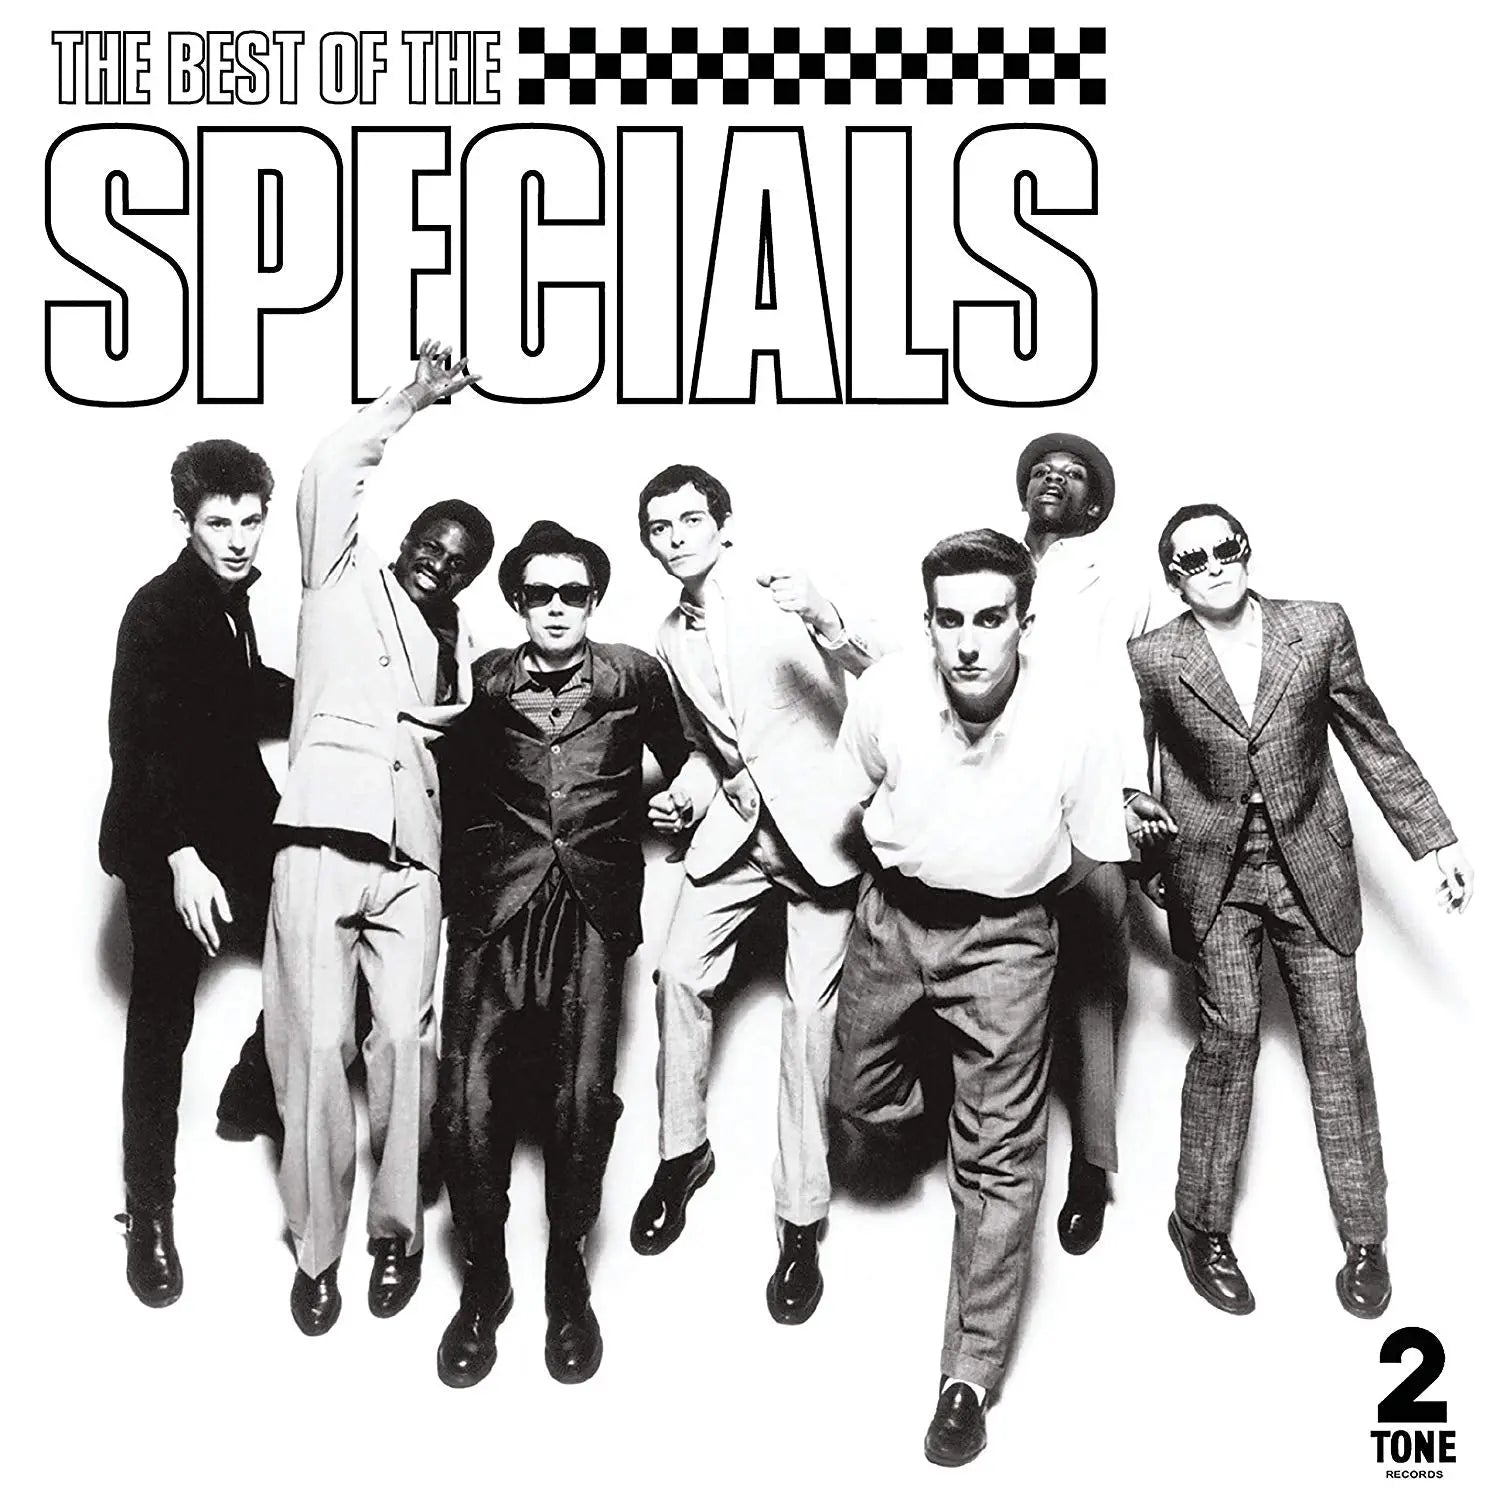 The Specials - Best Of The Specials [180-Gram Vinyl LP]